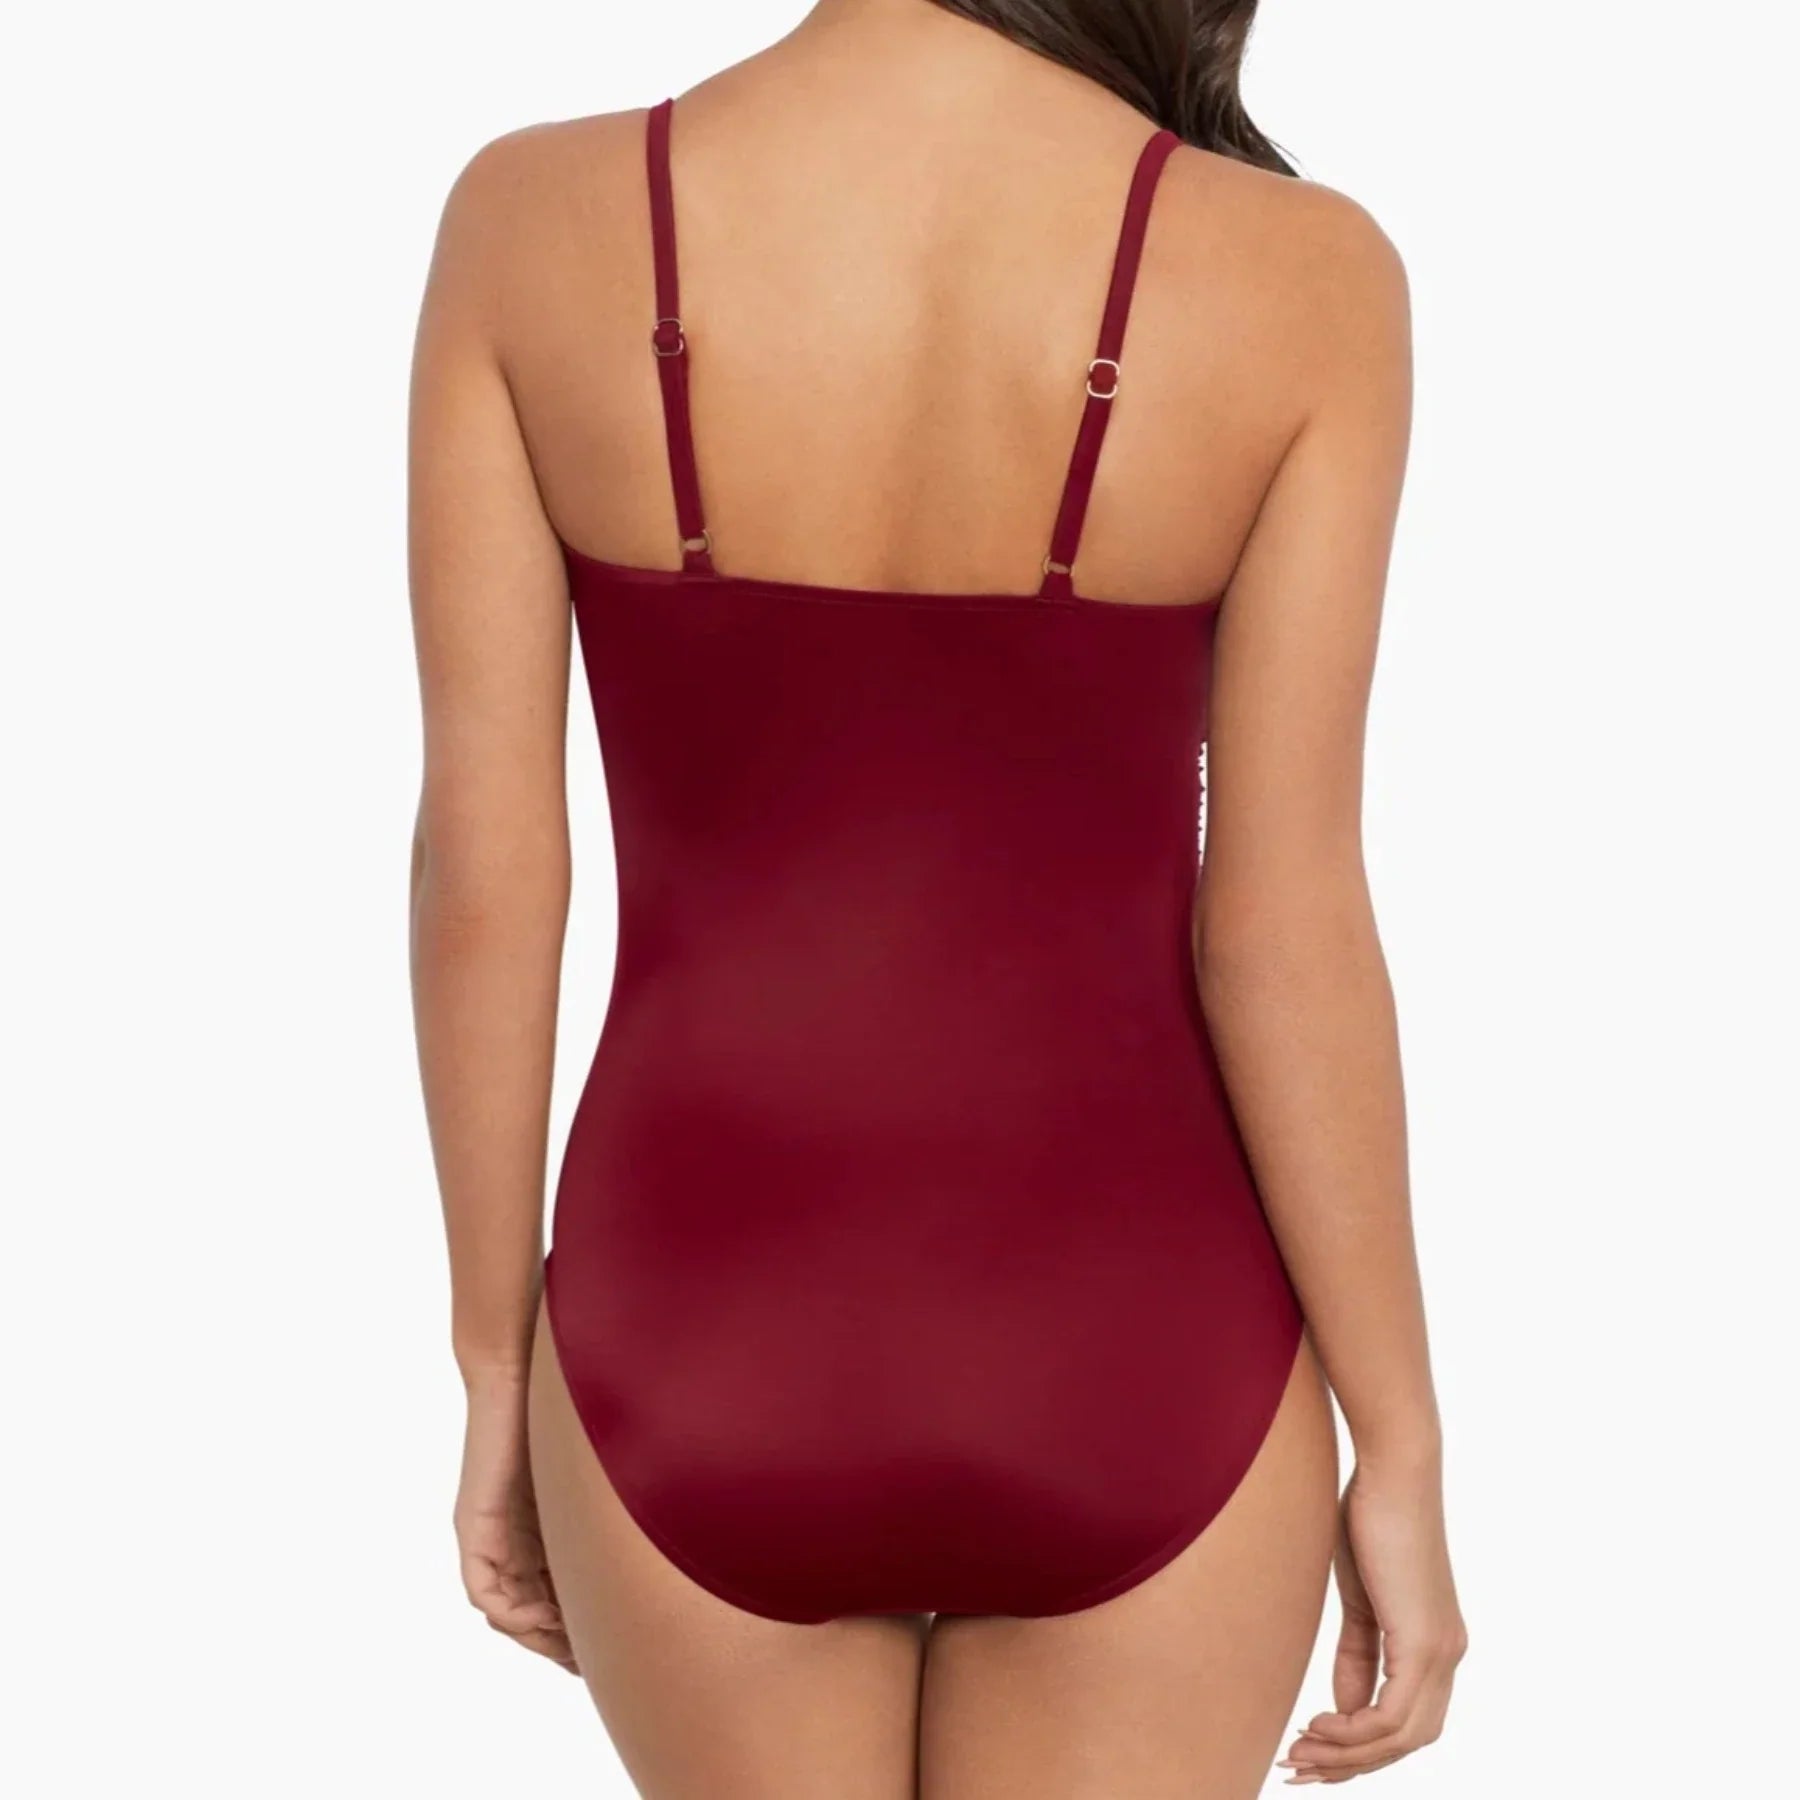 Isabel One Piece Swimsuit 6006018 - Merlot